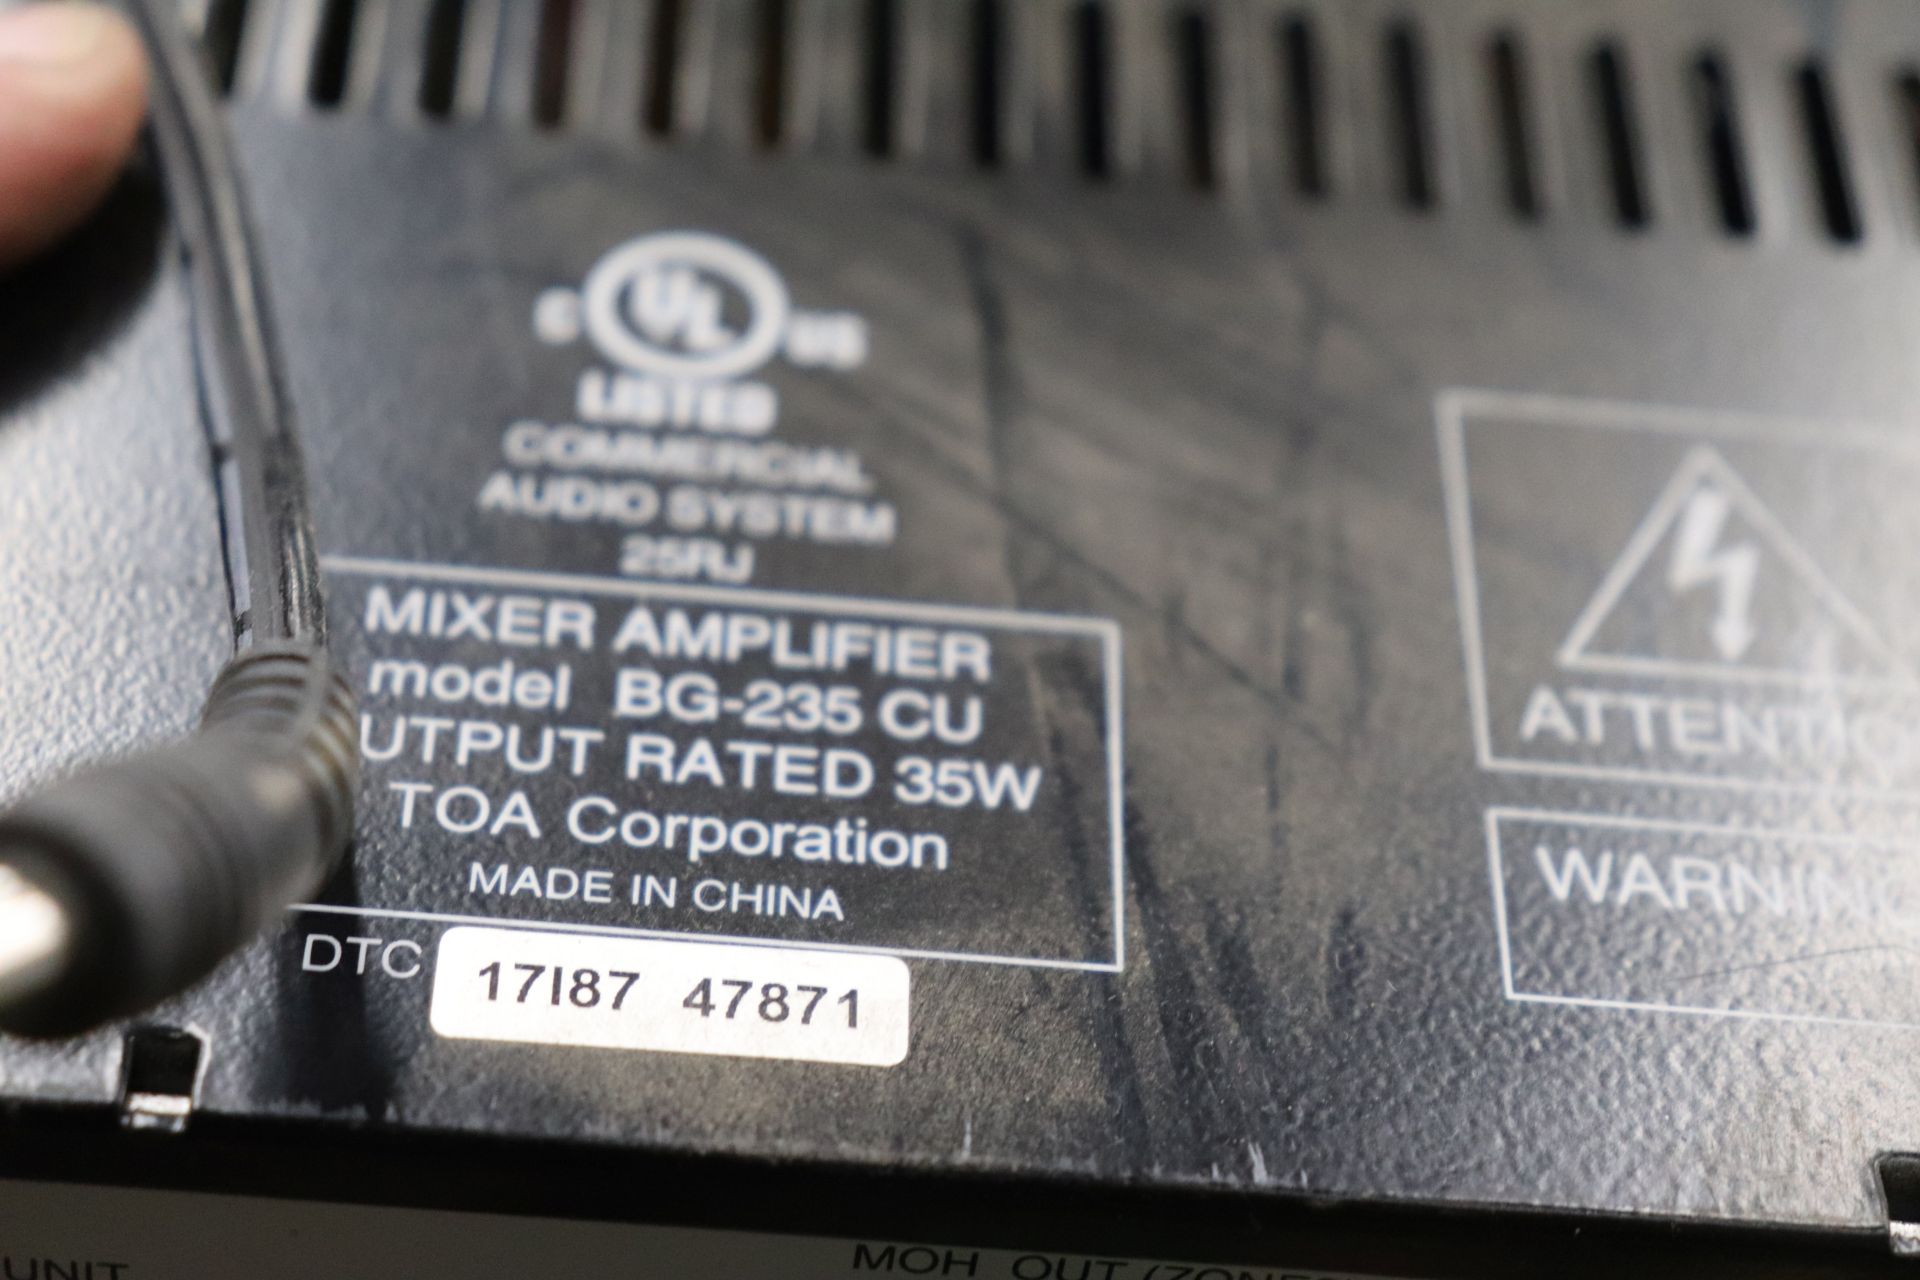 Toa Mixer Amplifier, model BG-235 - Image 3 of 3